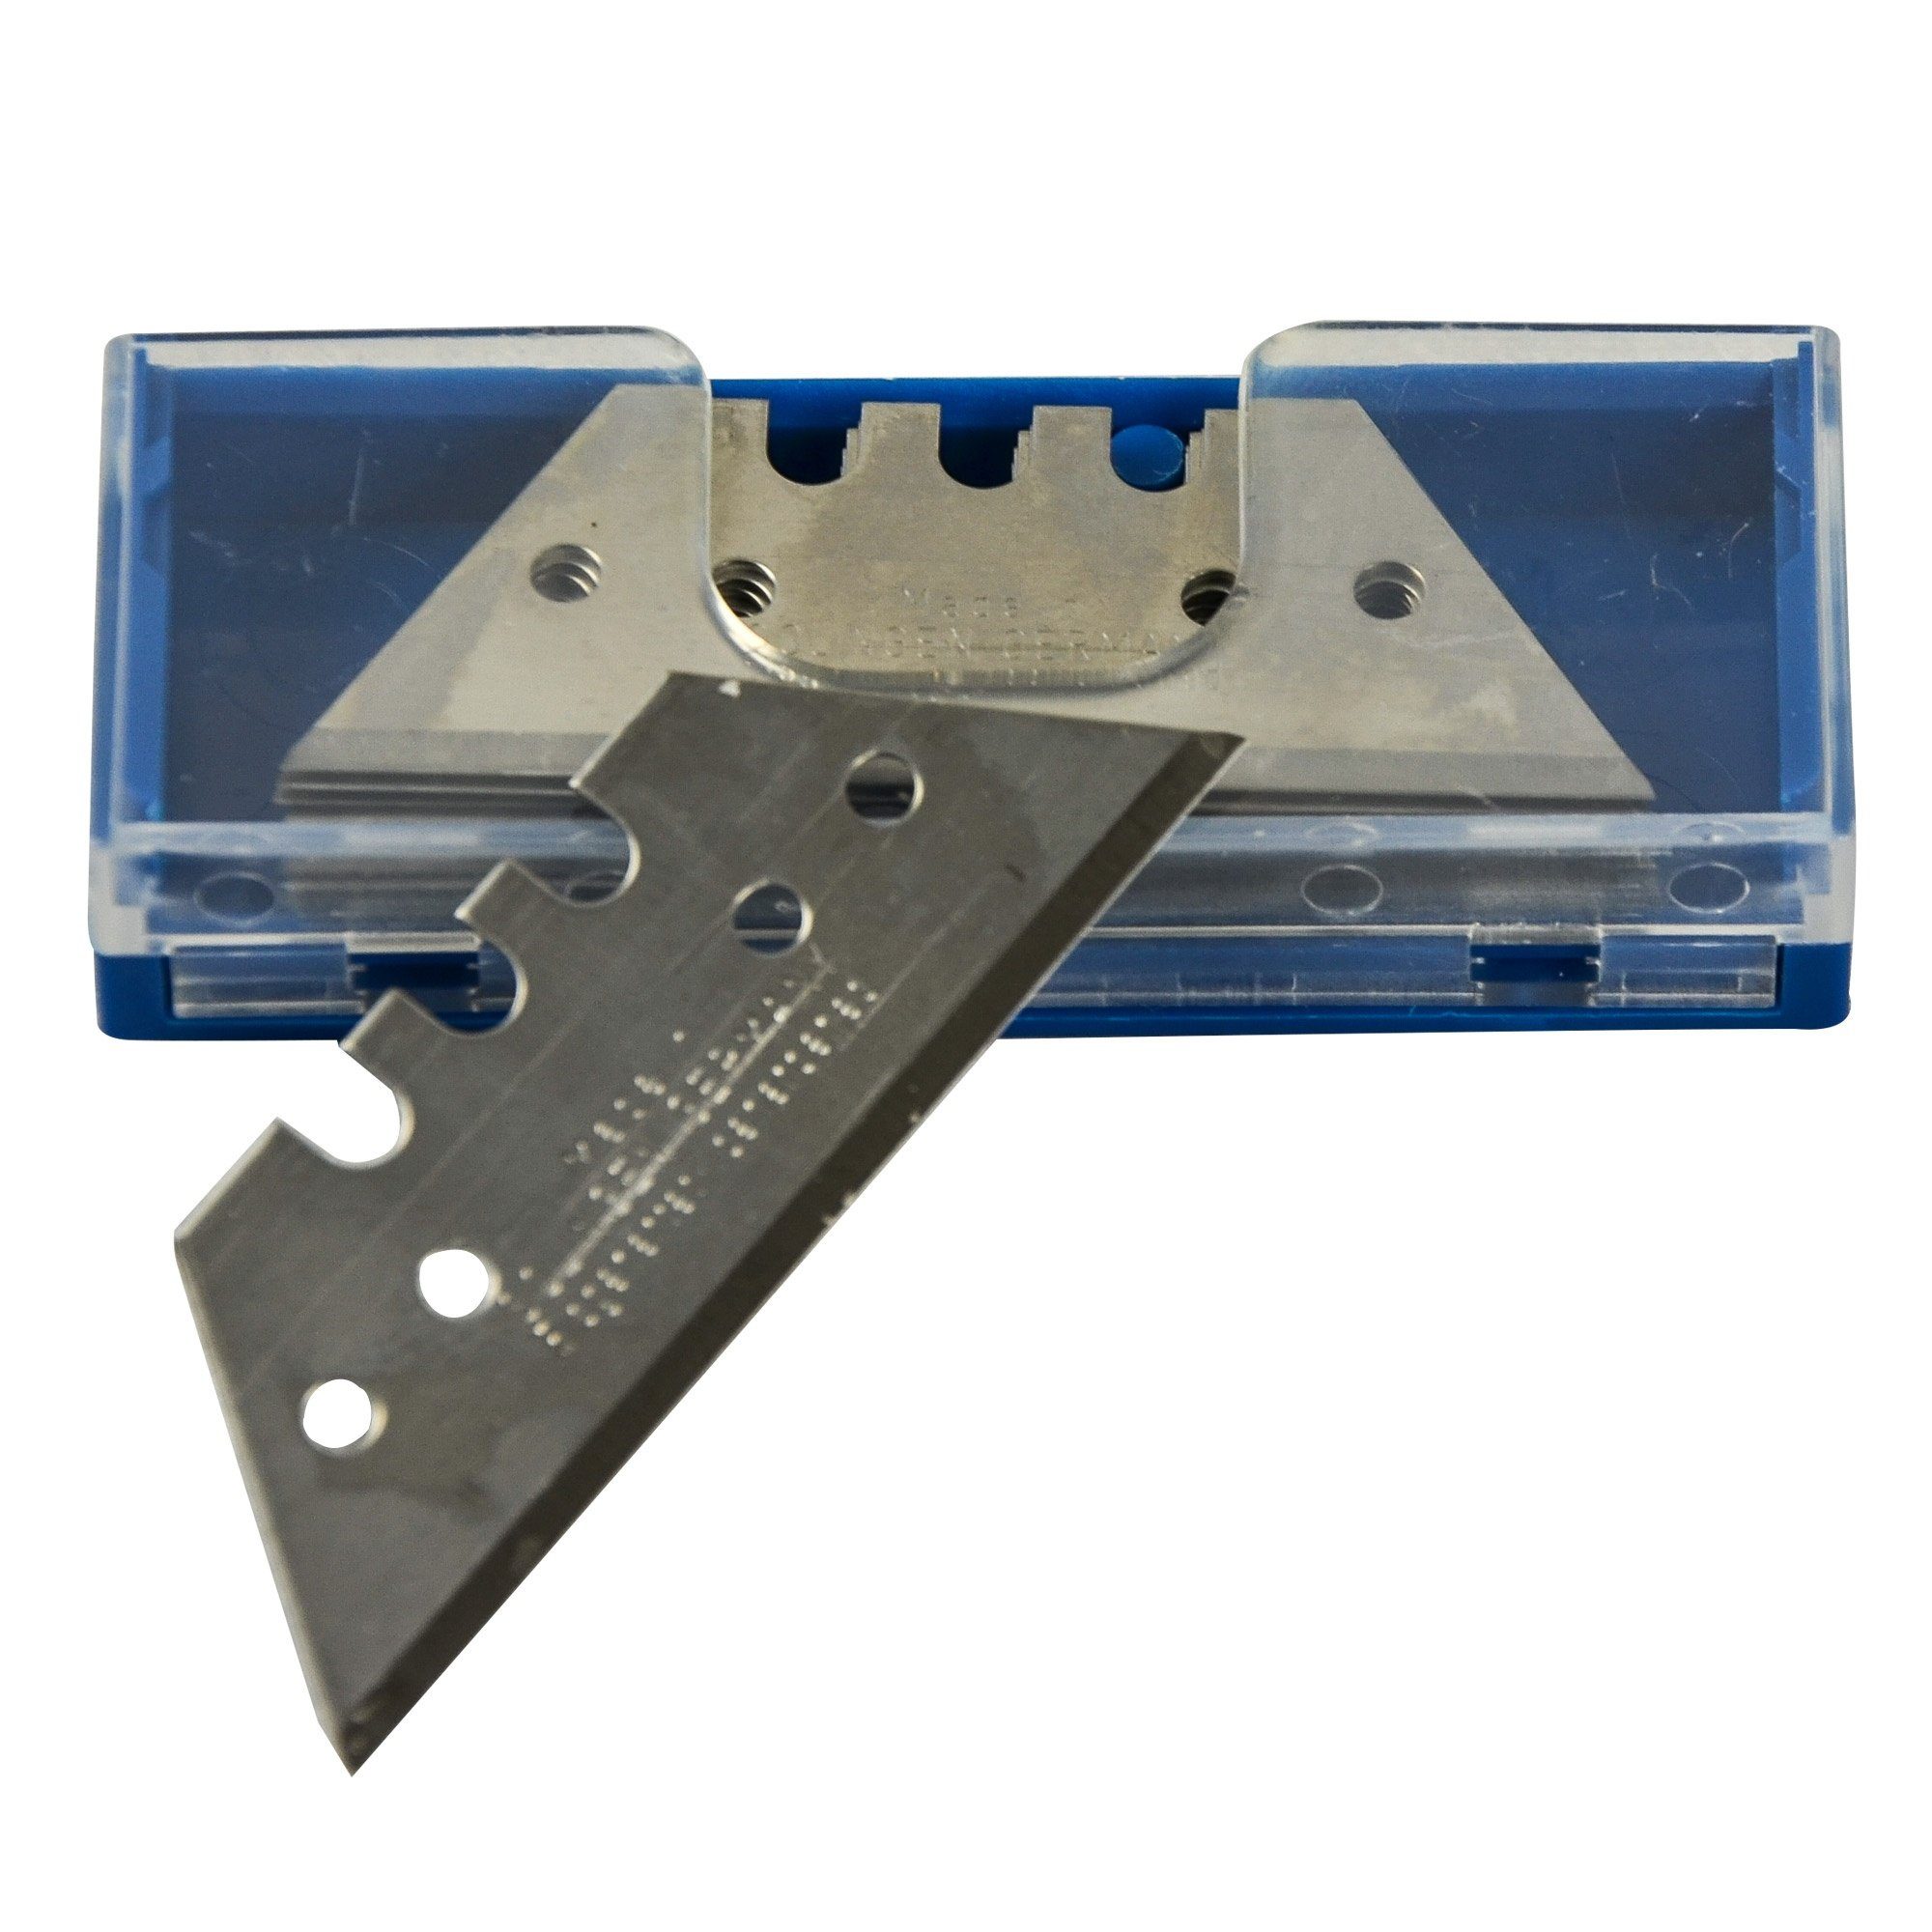 Scorprotect® Cuttermesser Profi Trapezklingen 0,65 mm Klingenstärke, im Spender